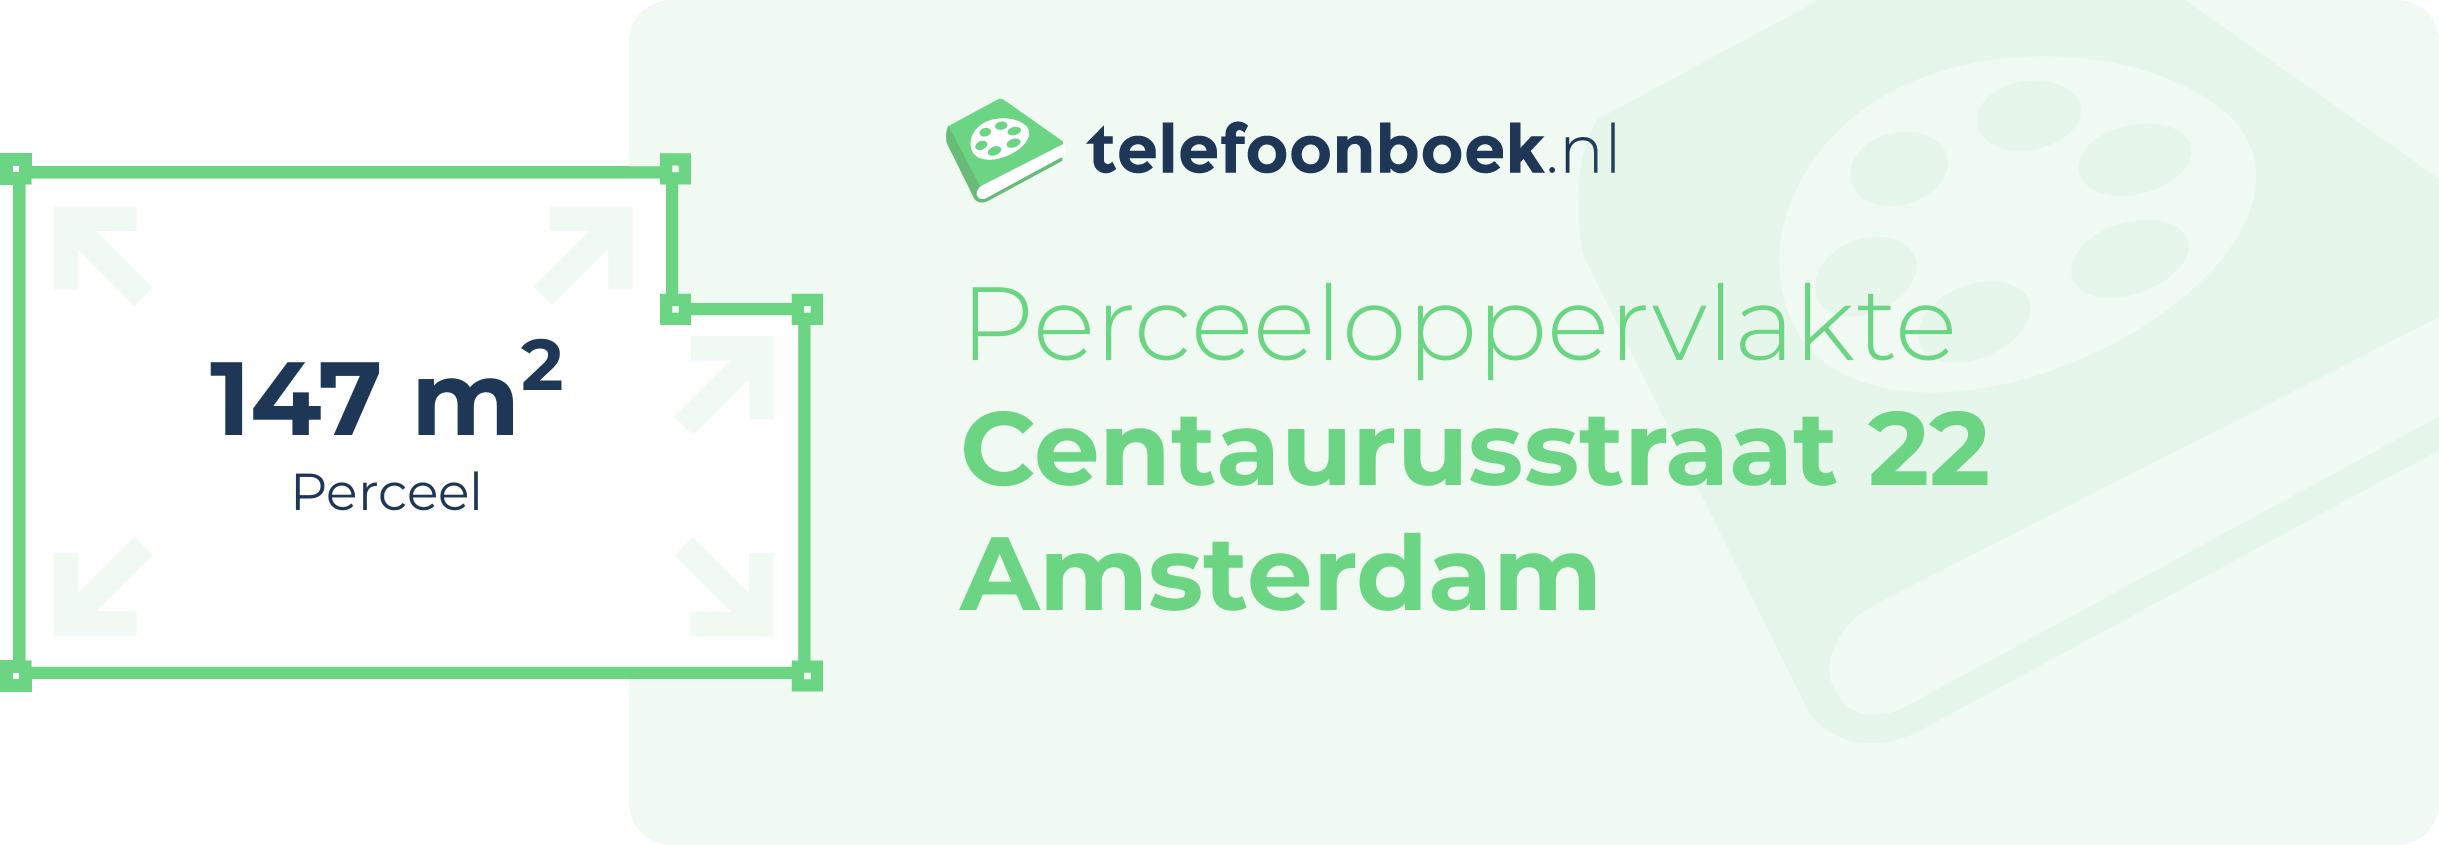 Perceeloppervlakte Centaurusstraat 22 Amsterdam